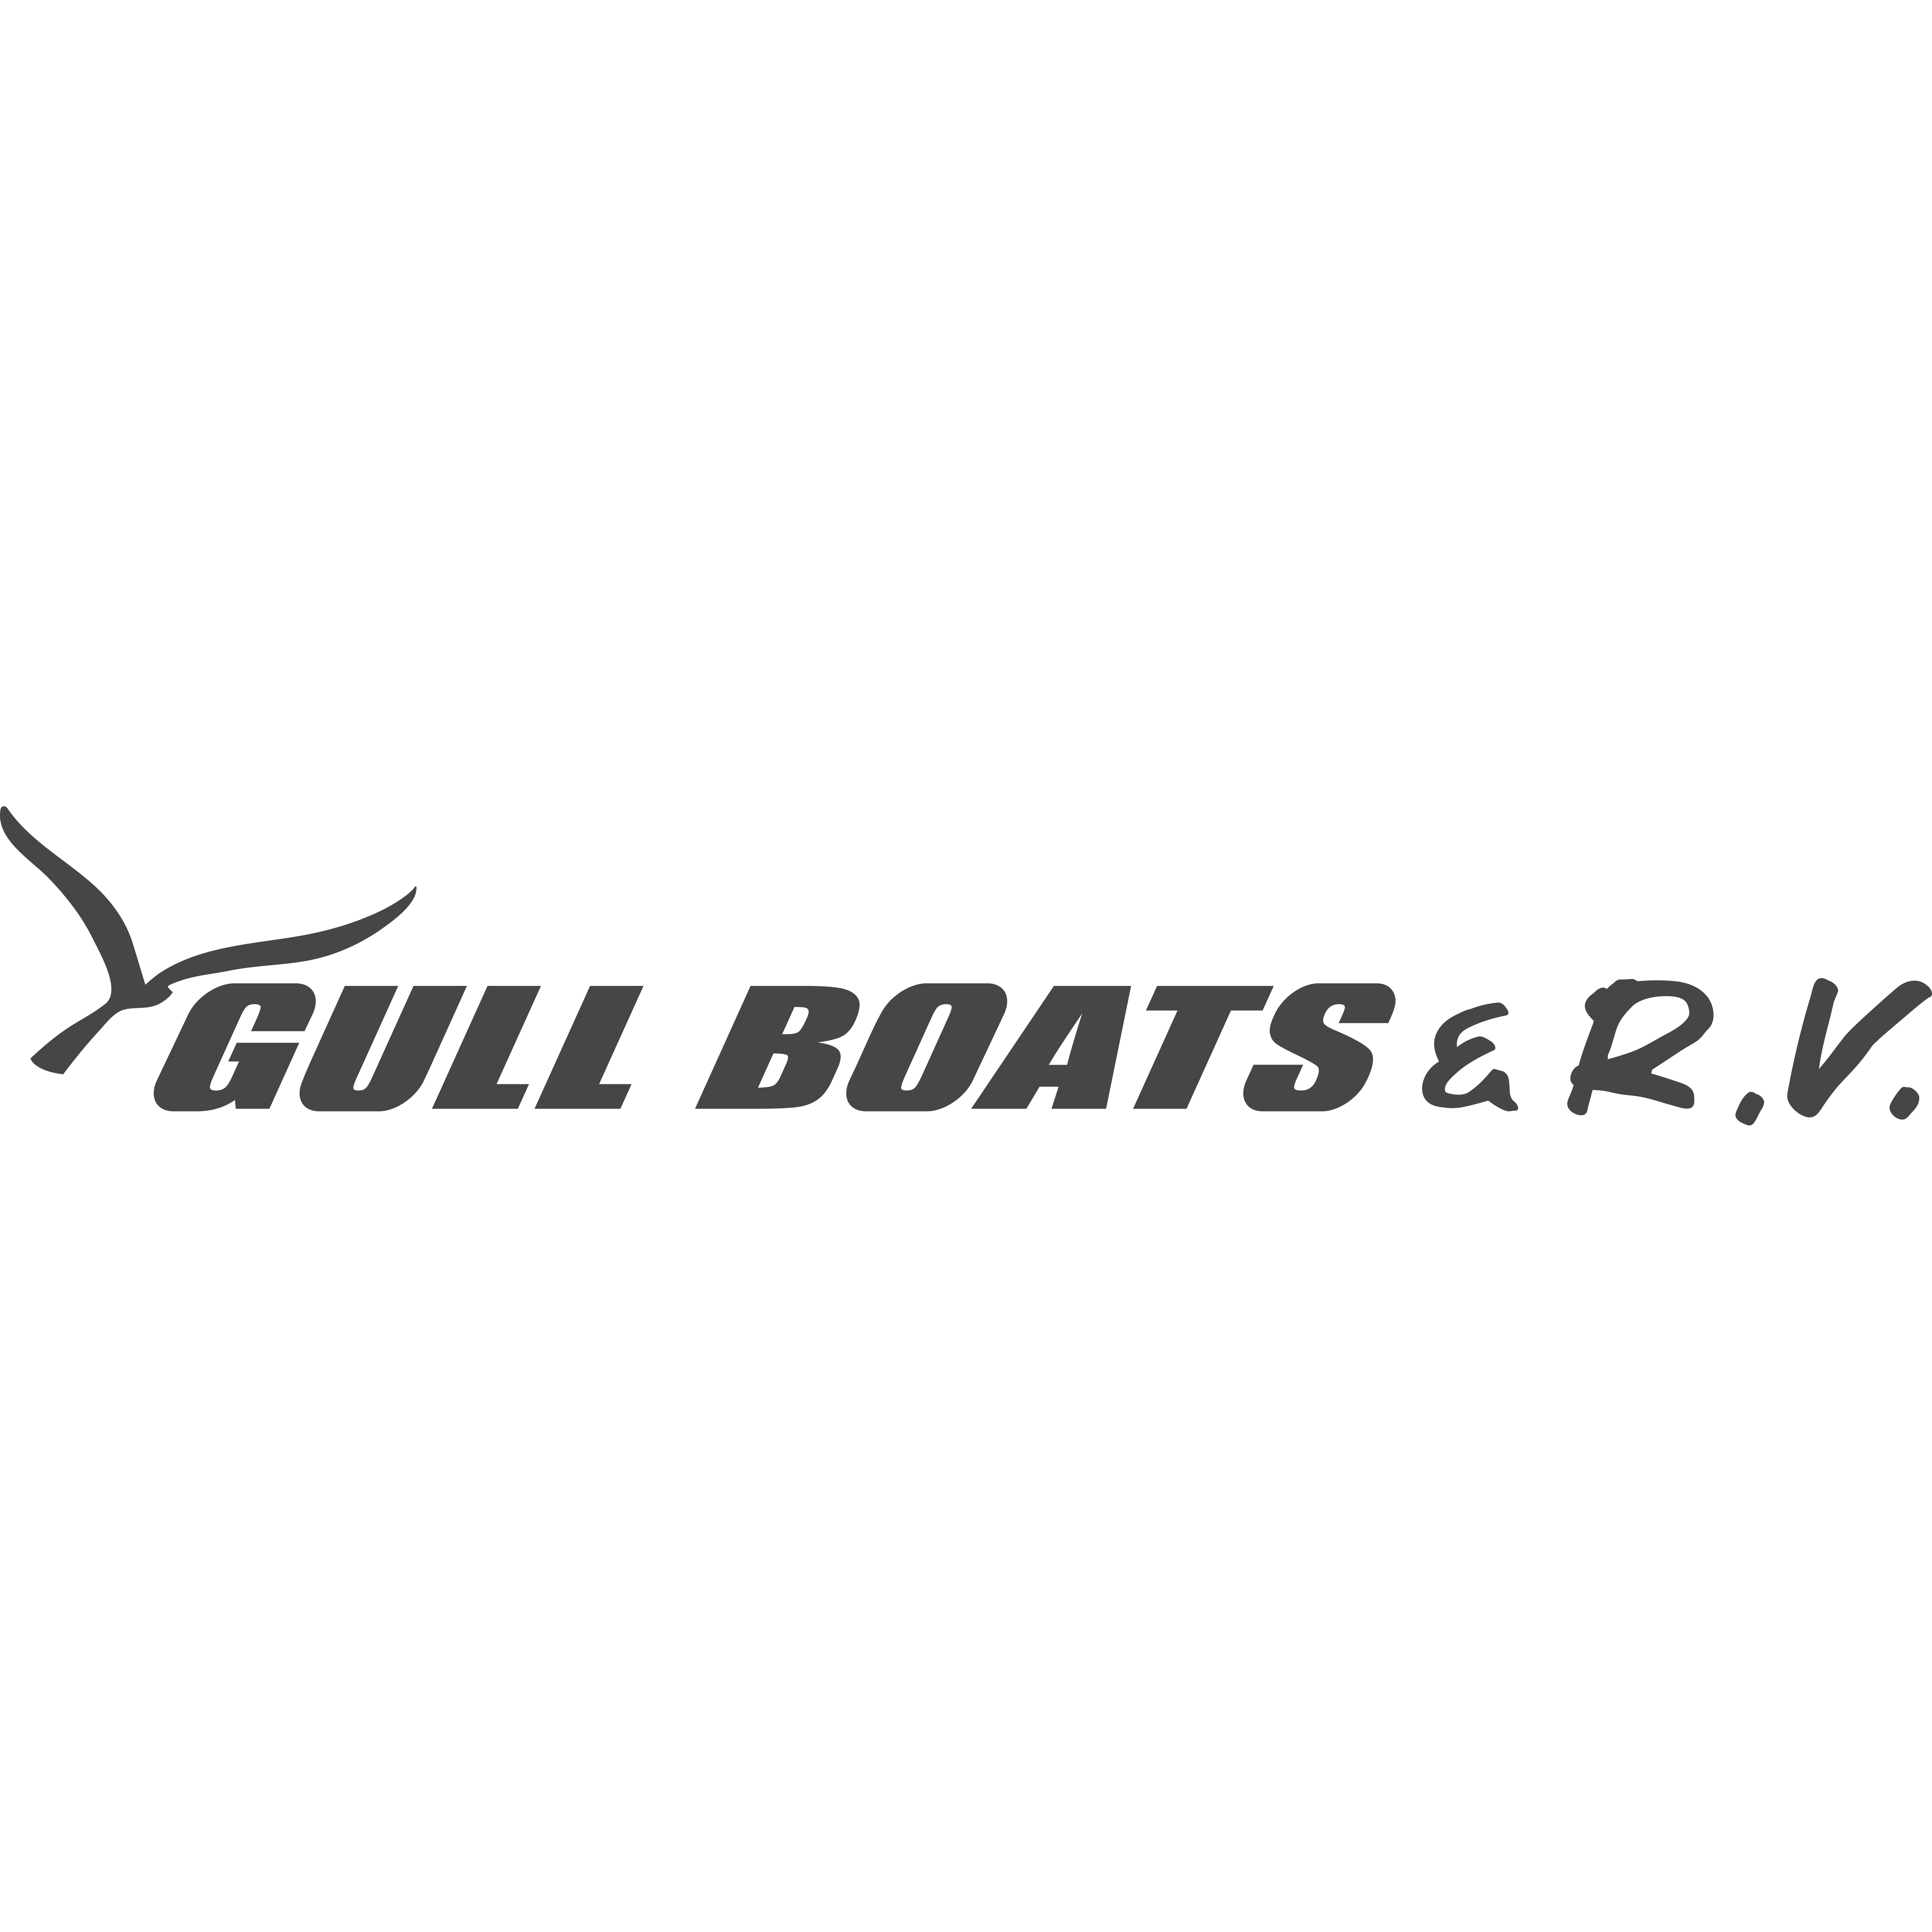 Gull Boats & RV Logo